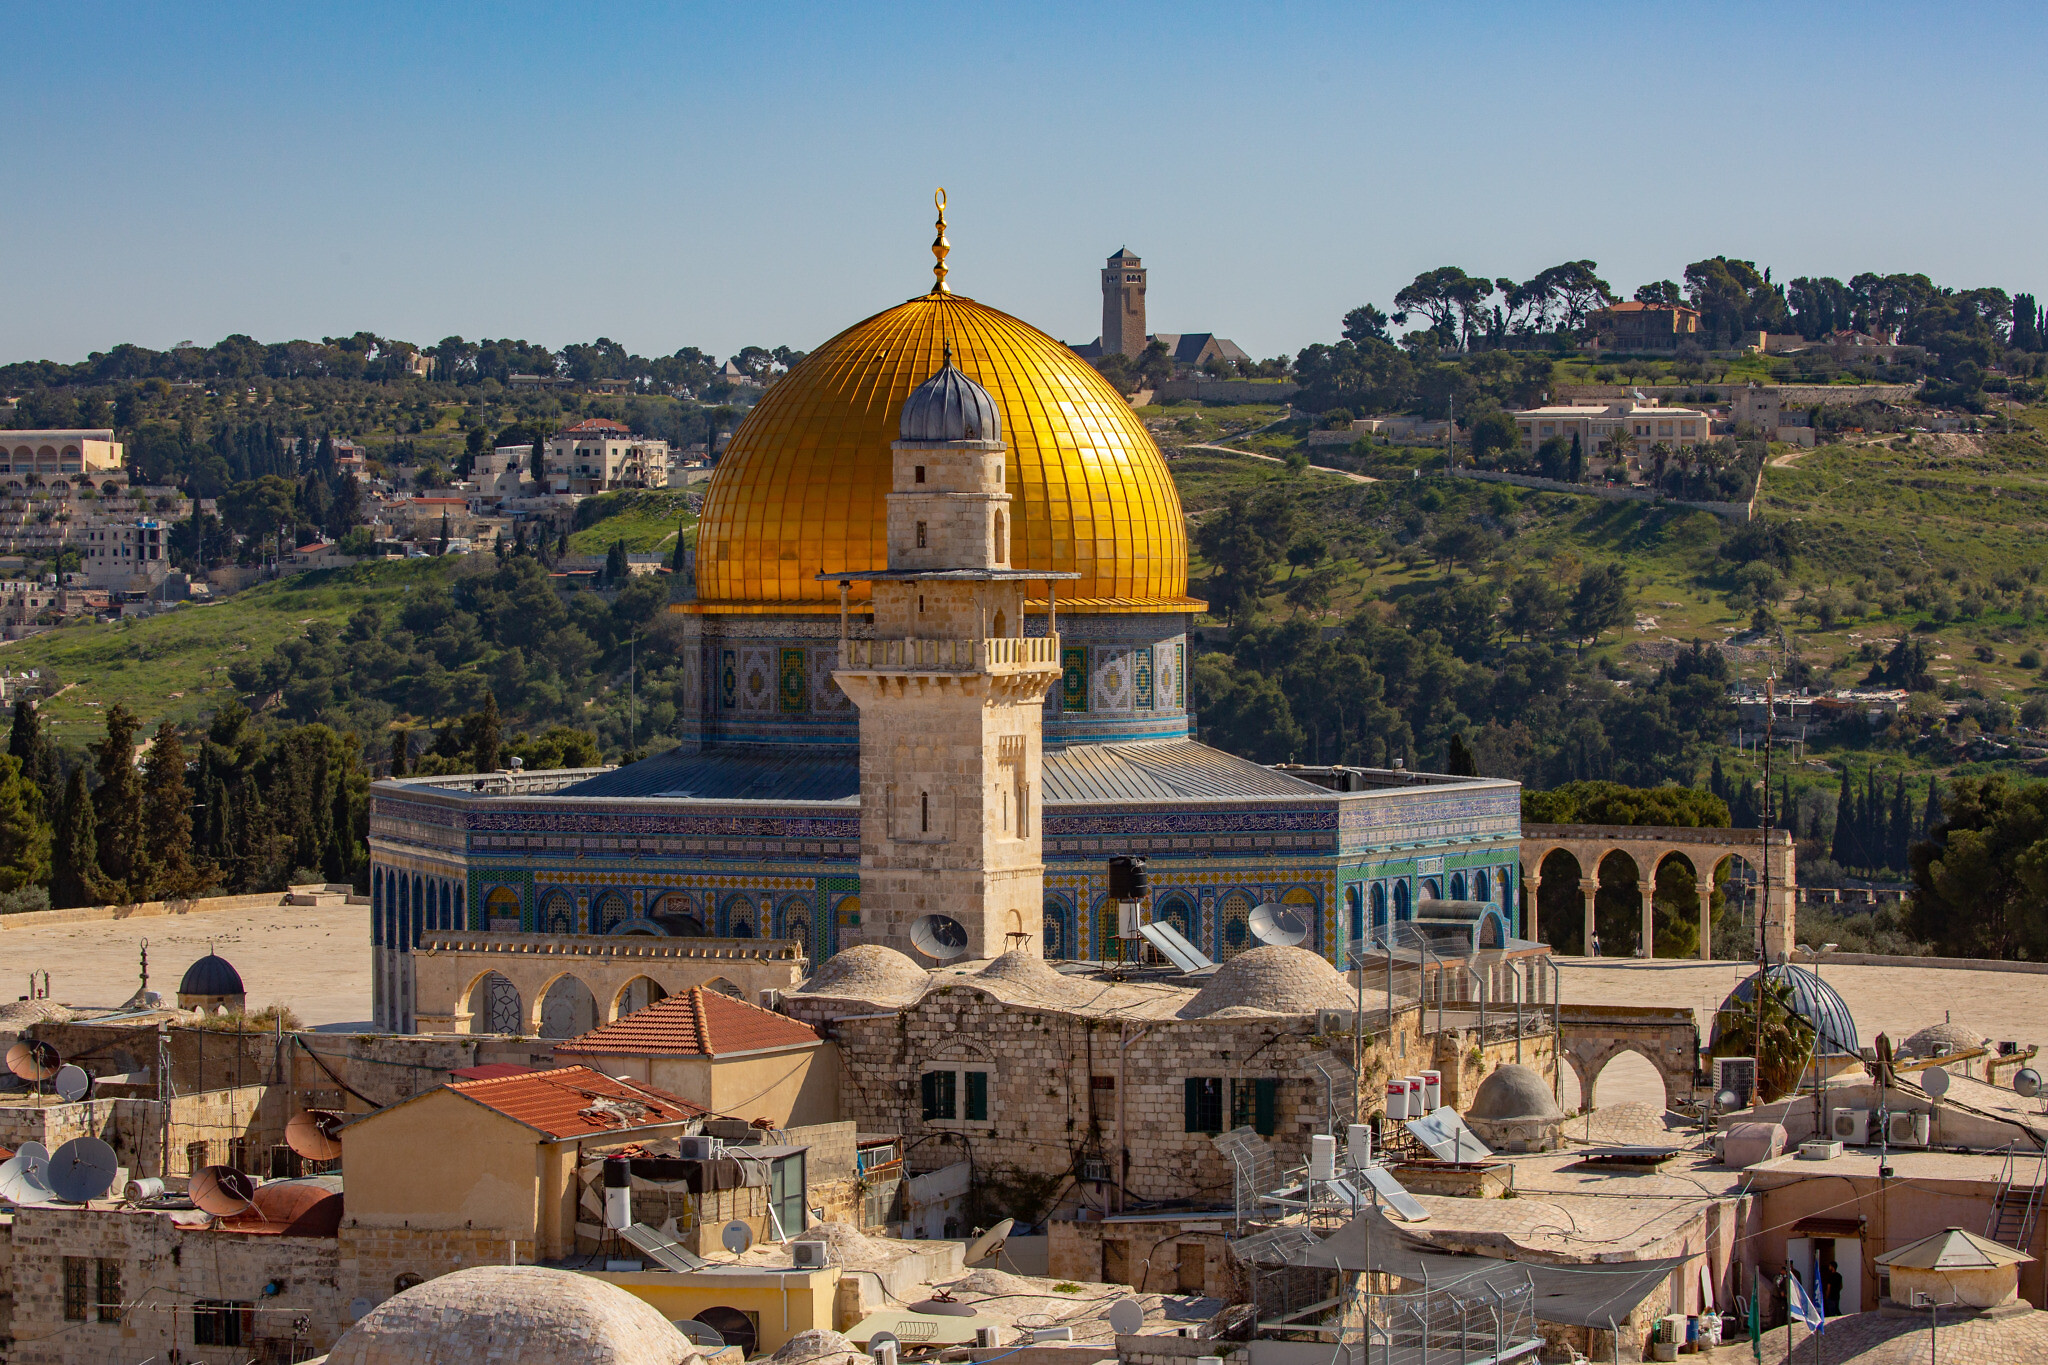 Jordan slams Israeli 'violations' as 1,200 Jews visit Temple Mount for Passover | Times of